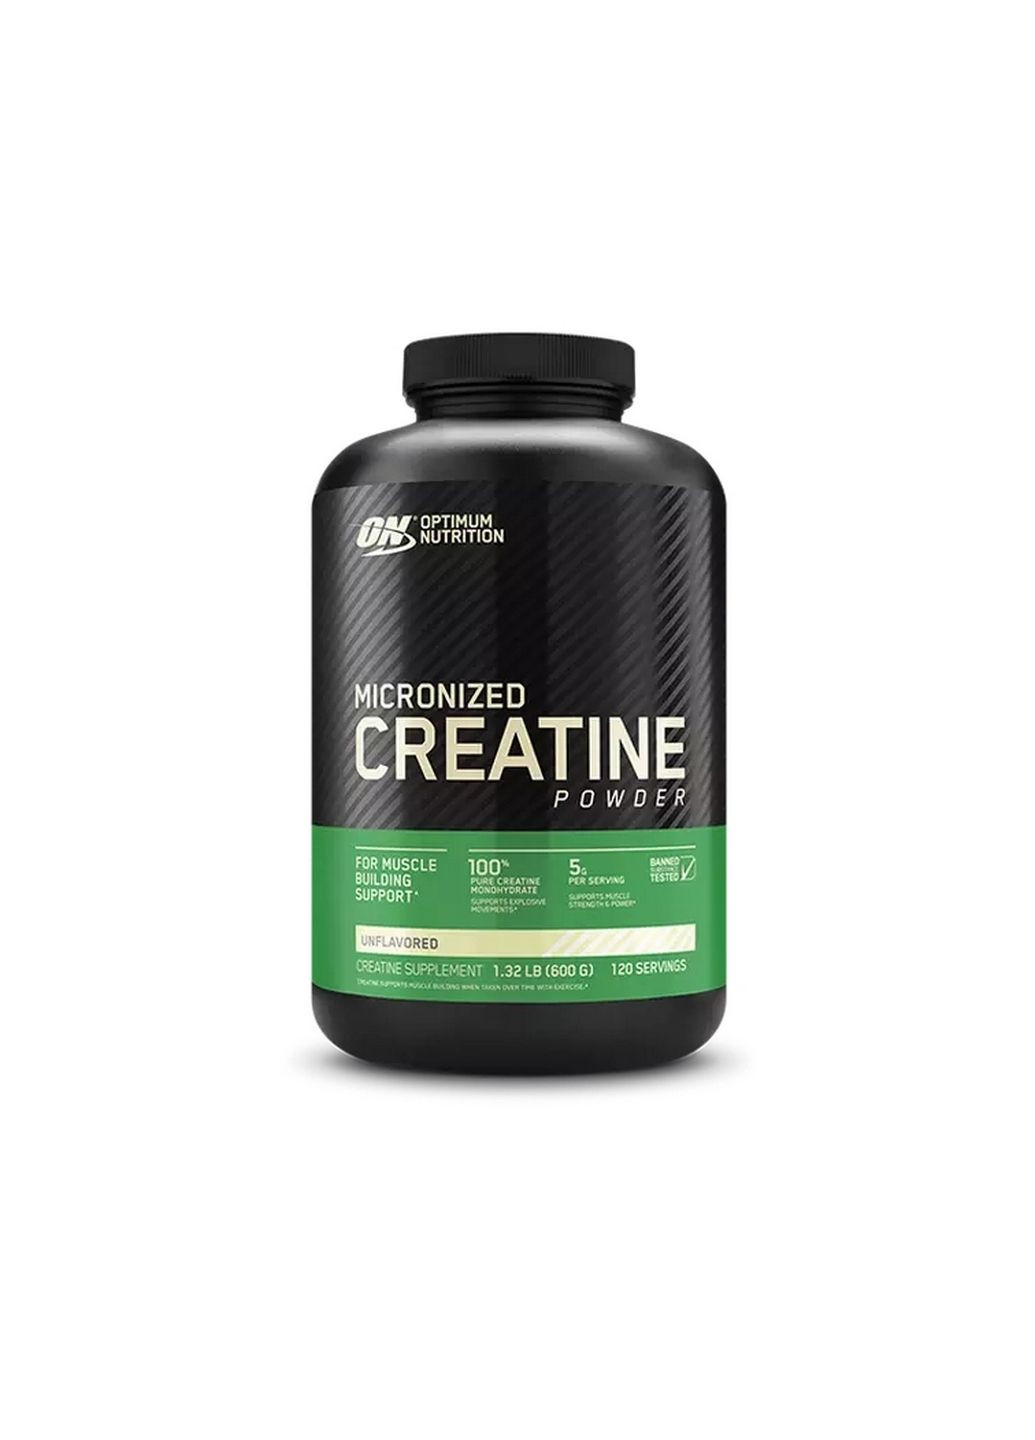 Креатин Optimum Micronized Creatine Powder, 600 грамм Optimum Nutrition (293480863)